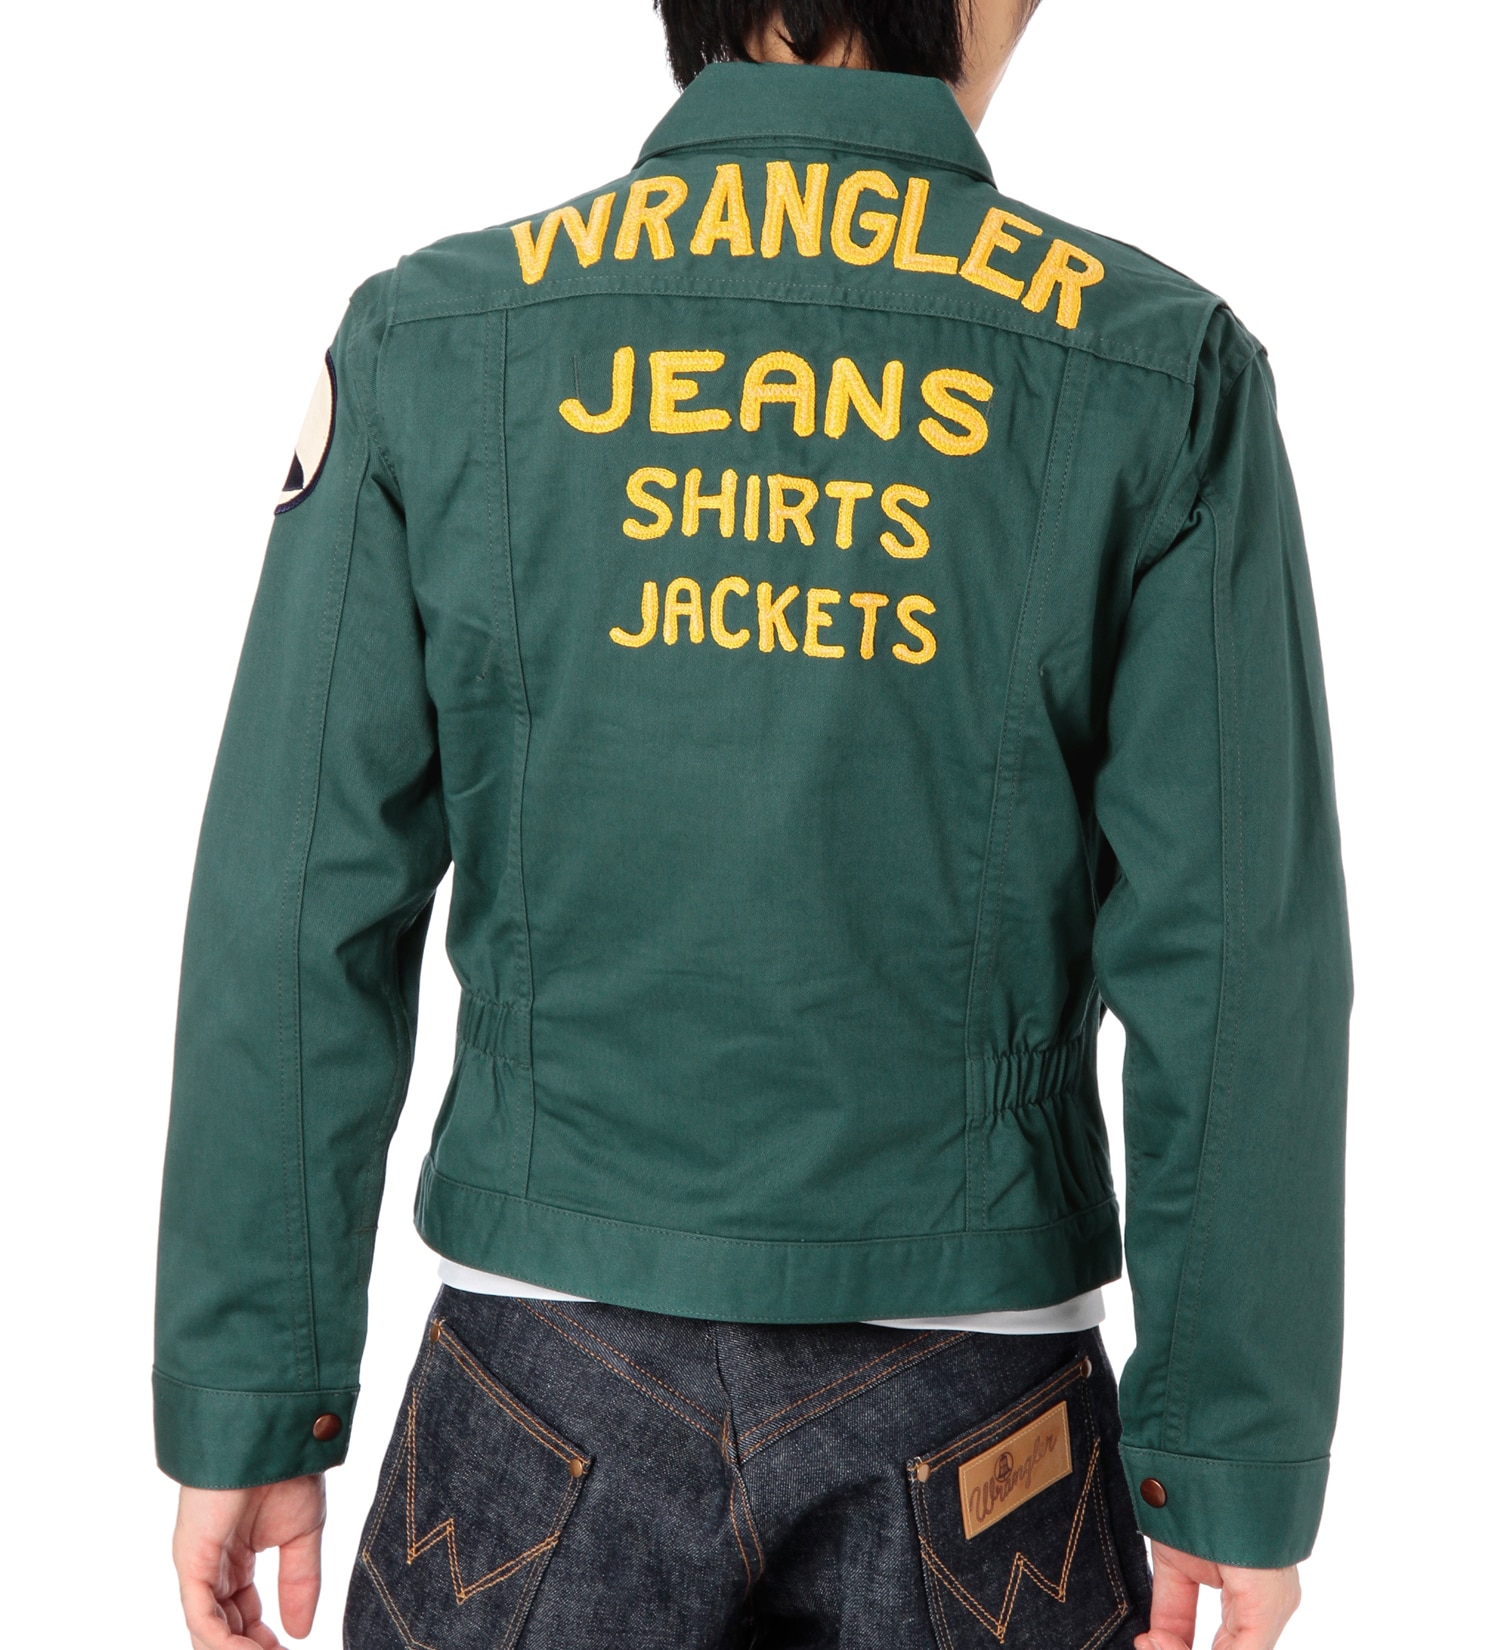 Wrangler(ラングラー)のARCHIVES 12MJZ チャンピオンジャケット|ジャケット/アウター/デニムジャケット/メンズ|グリーン